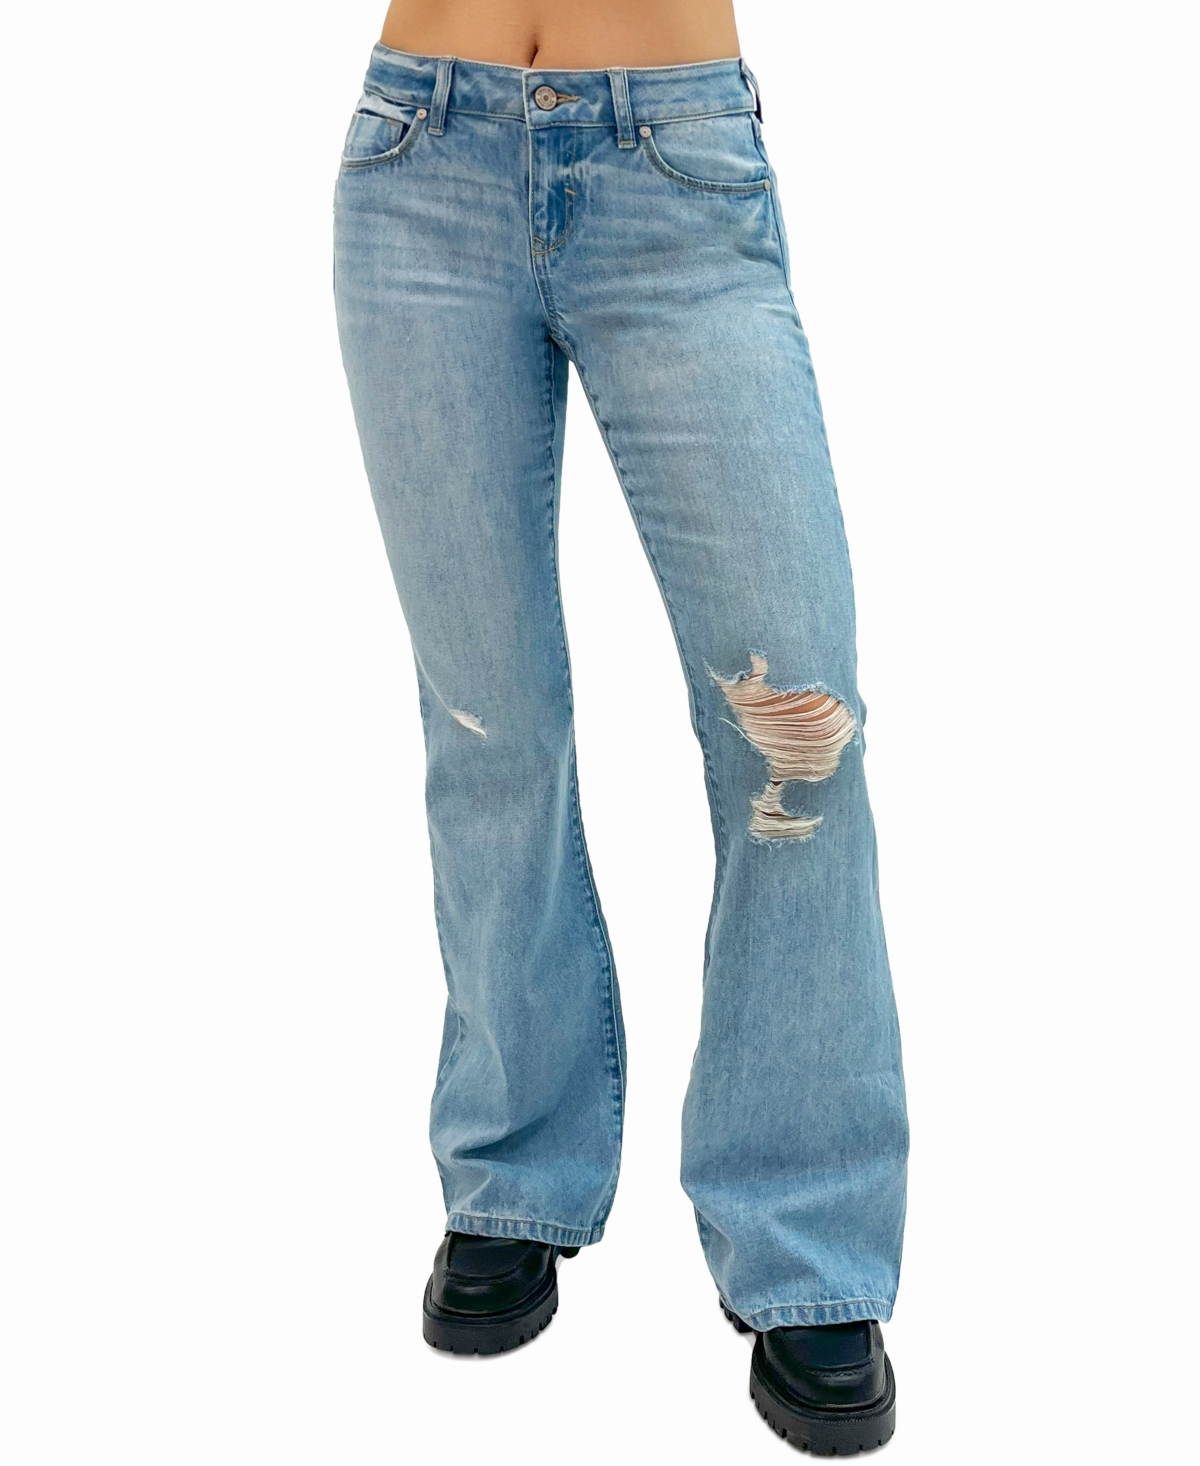 Rewash Women's Low-rise Distressed Flare Jeans In Medium Wash